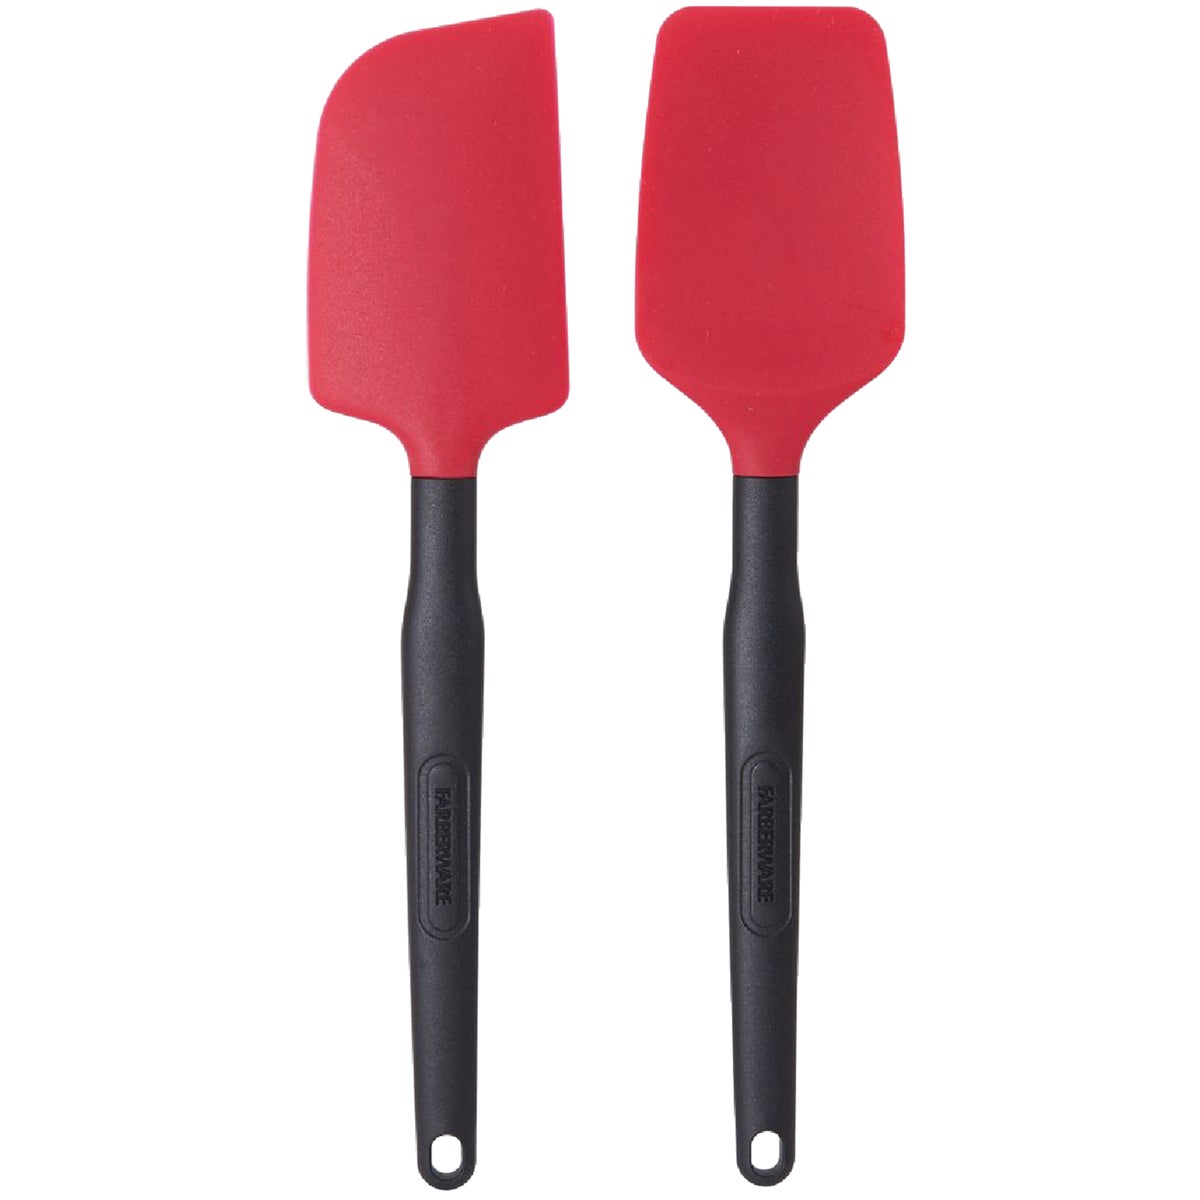 Farberware Classic Red Spoon/Scraper Spatula Set (2-Piece)